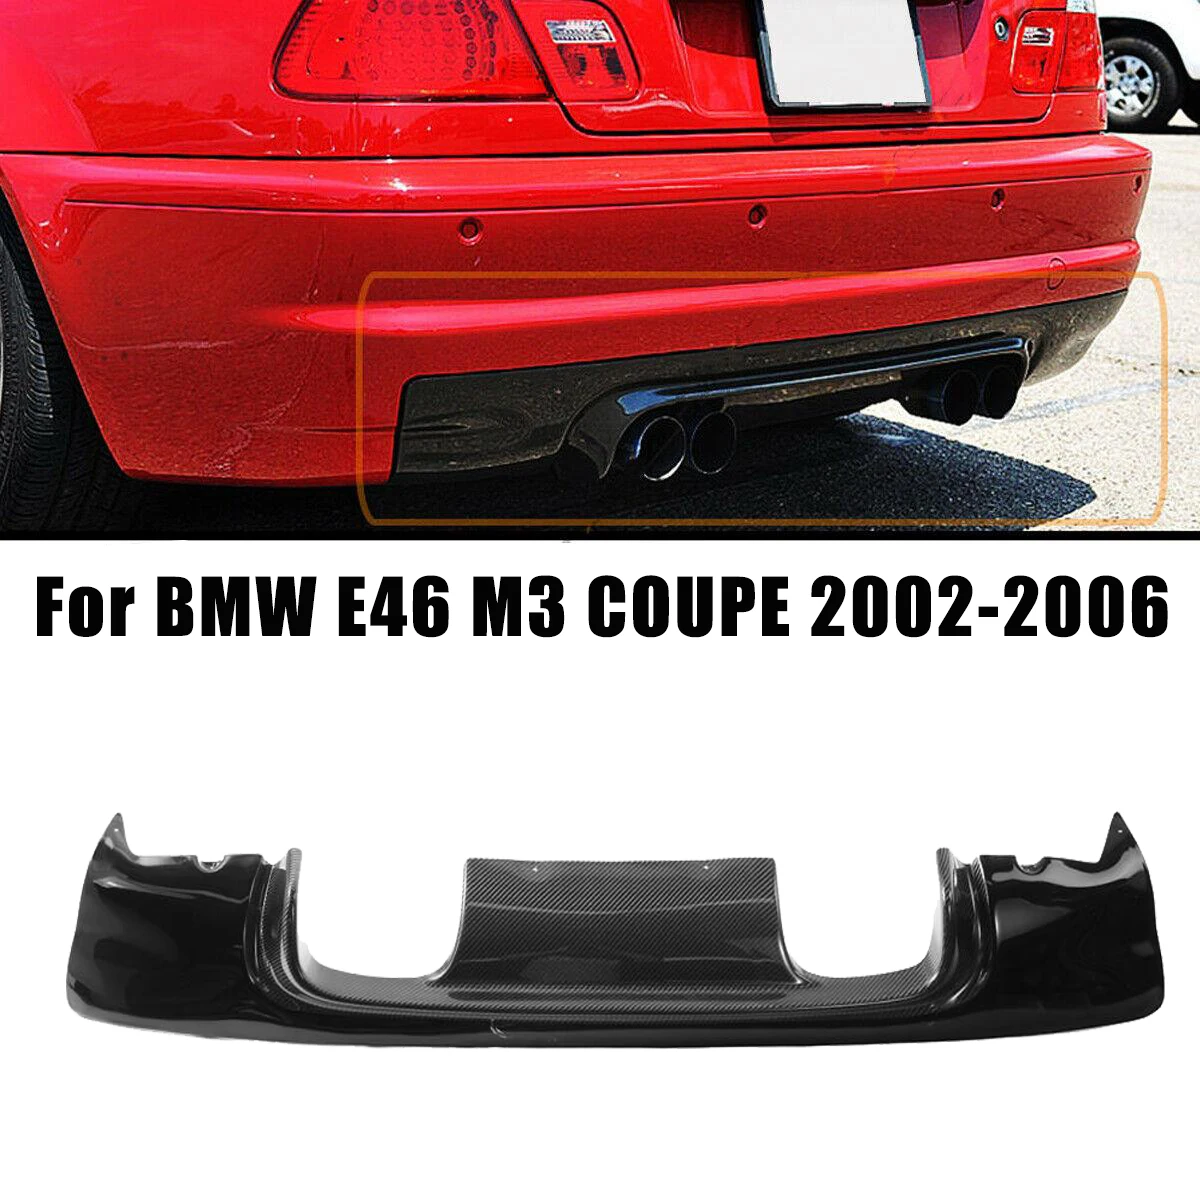 

For BMW 3 Series E46 M3 COUPE 2002-2006 Rear Bumper Diffuser Splitter Lip Carbon Fiber Black Look Rear Bumper Protection Guard